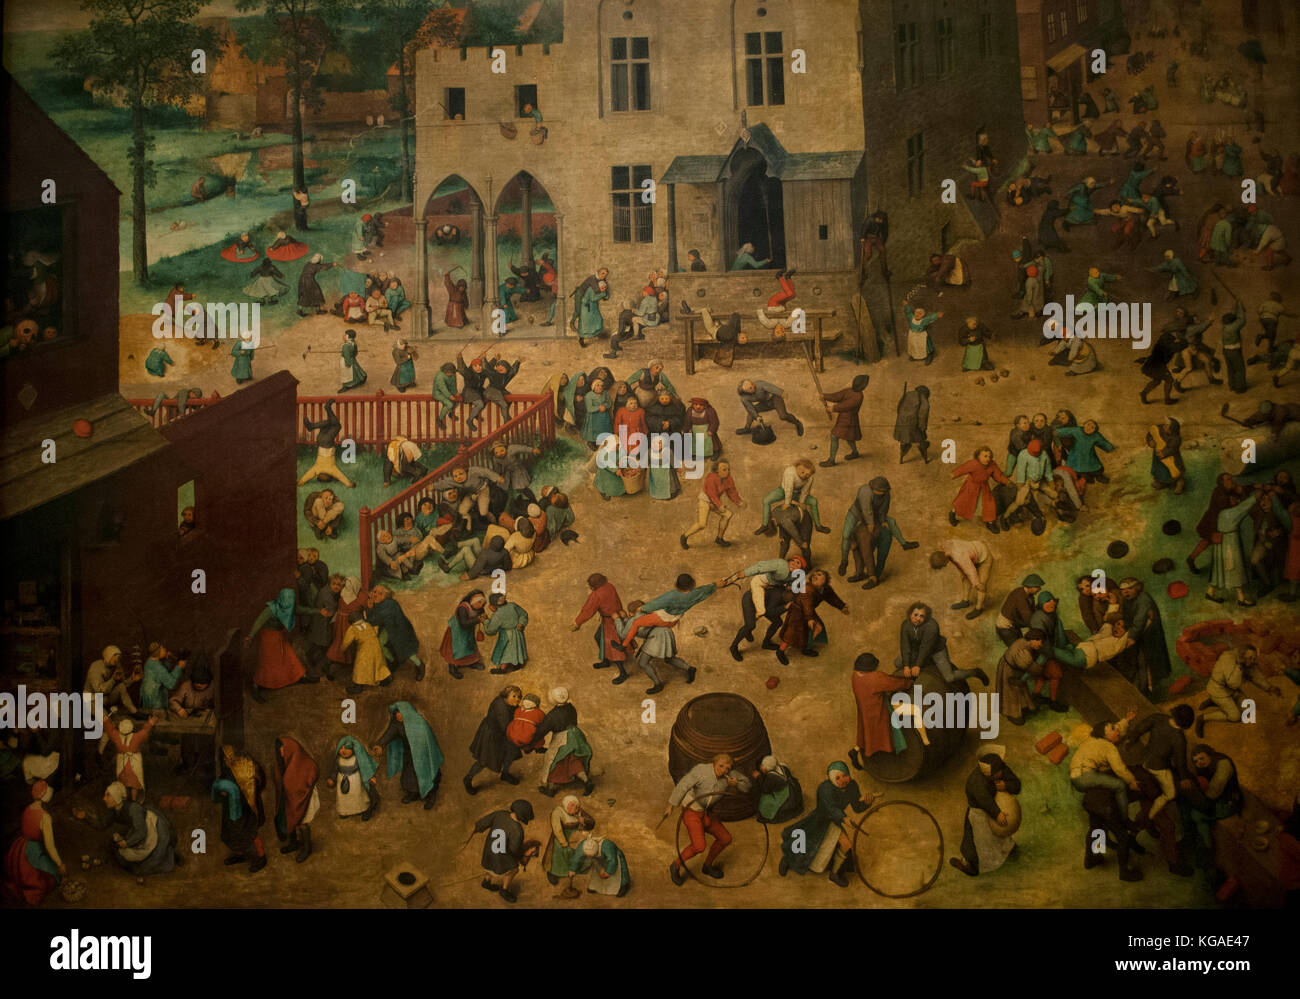 Pieter Bruegel the Elder. Artish of Dutch and Flemish. Renaissance. Children's Games, 1560. Oil on panel. Art History Museum (Kunsthistorisches Museum). Vienna. Austria. Stock Photo